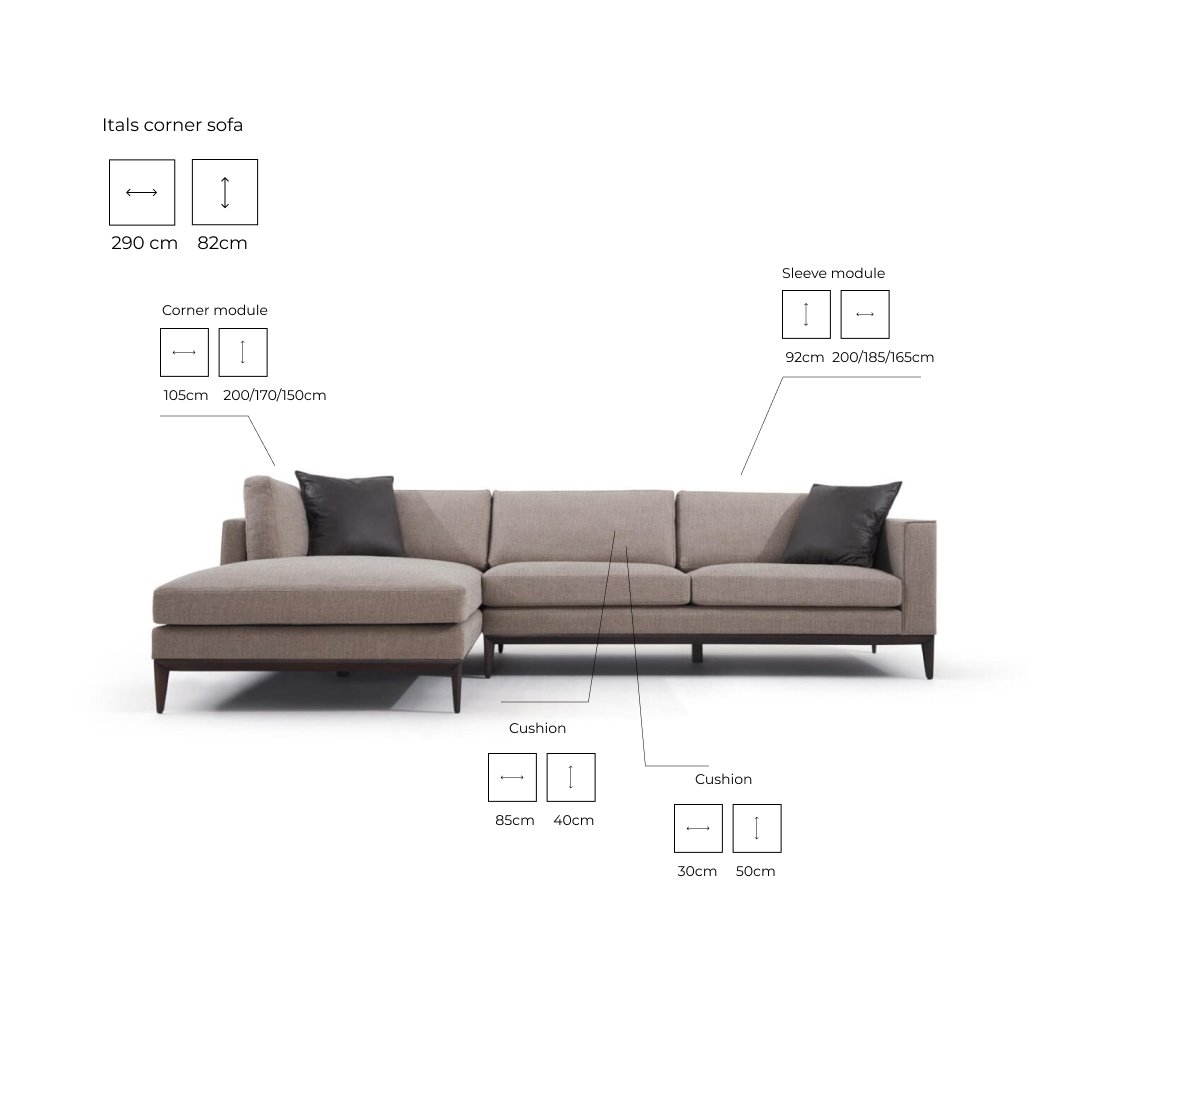 Itals corner sofa dimenzije